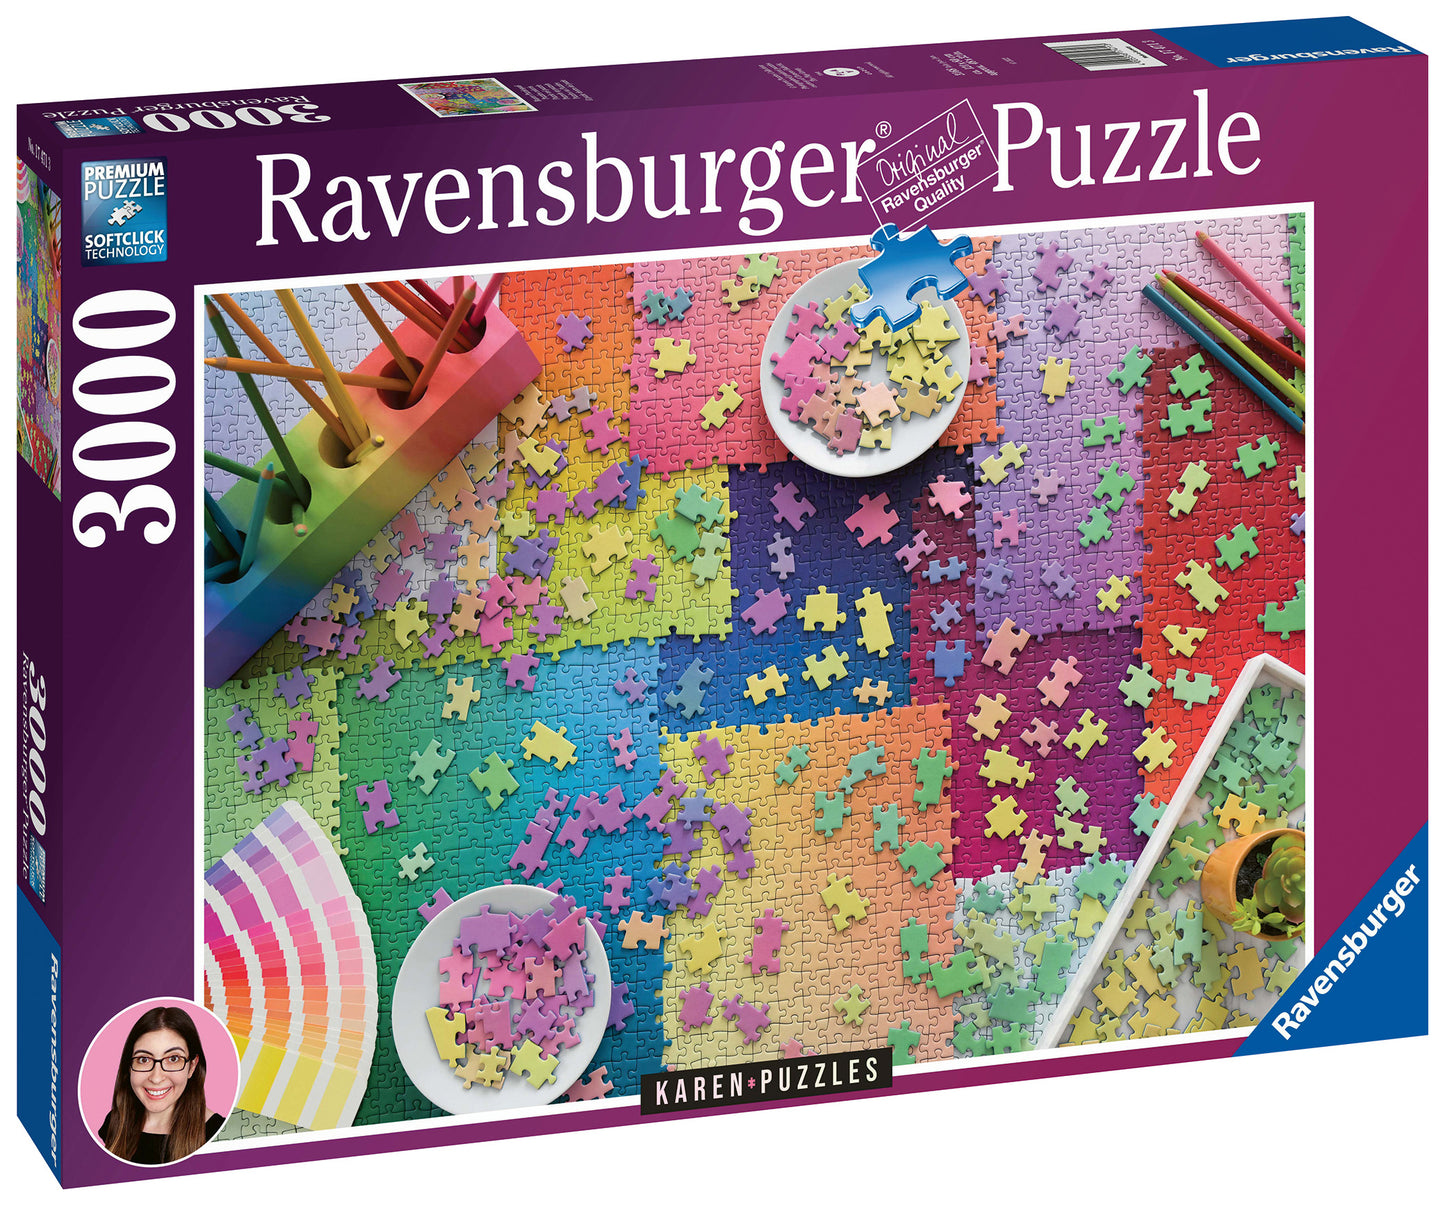 Ravensburger - Karen Puzzles - 3000 Piece Jigsaw Puzzle